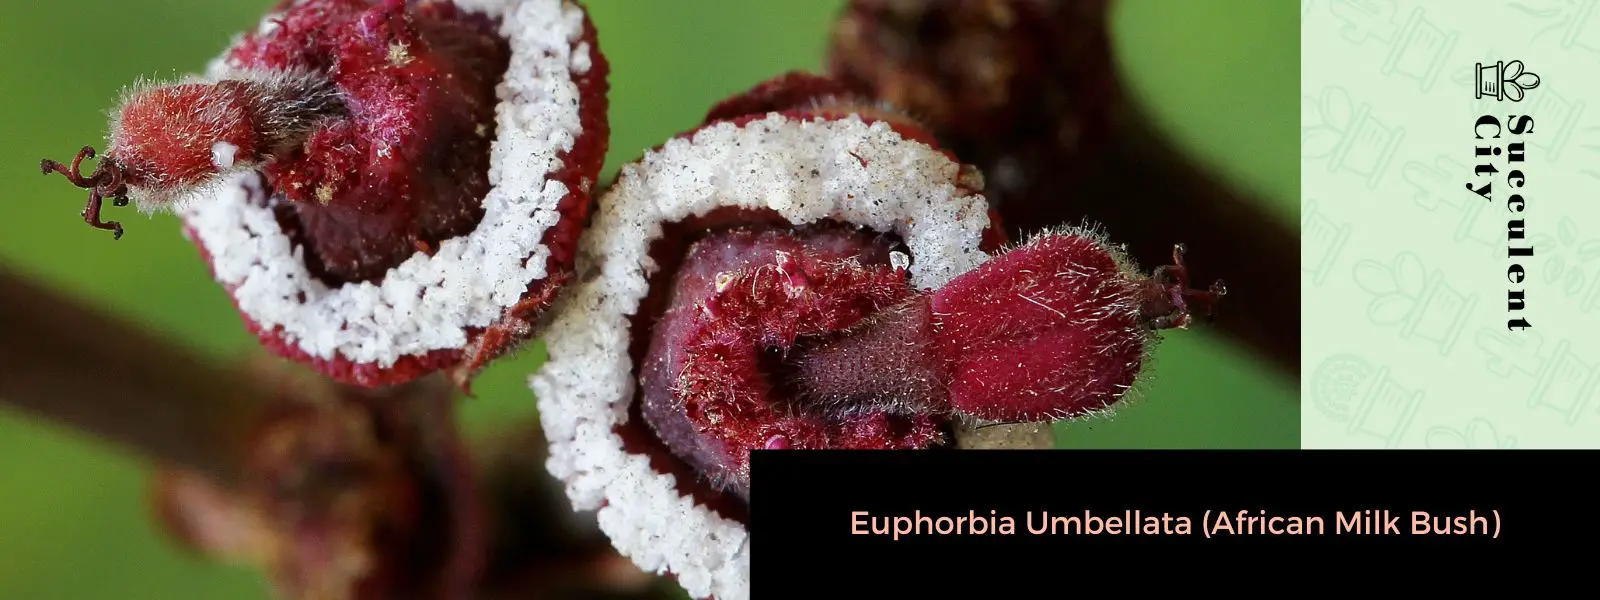 Euphorbia Umbellata (leche africana)